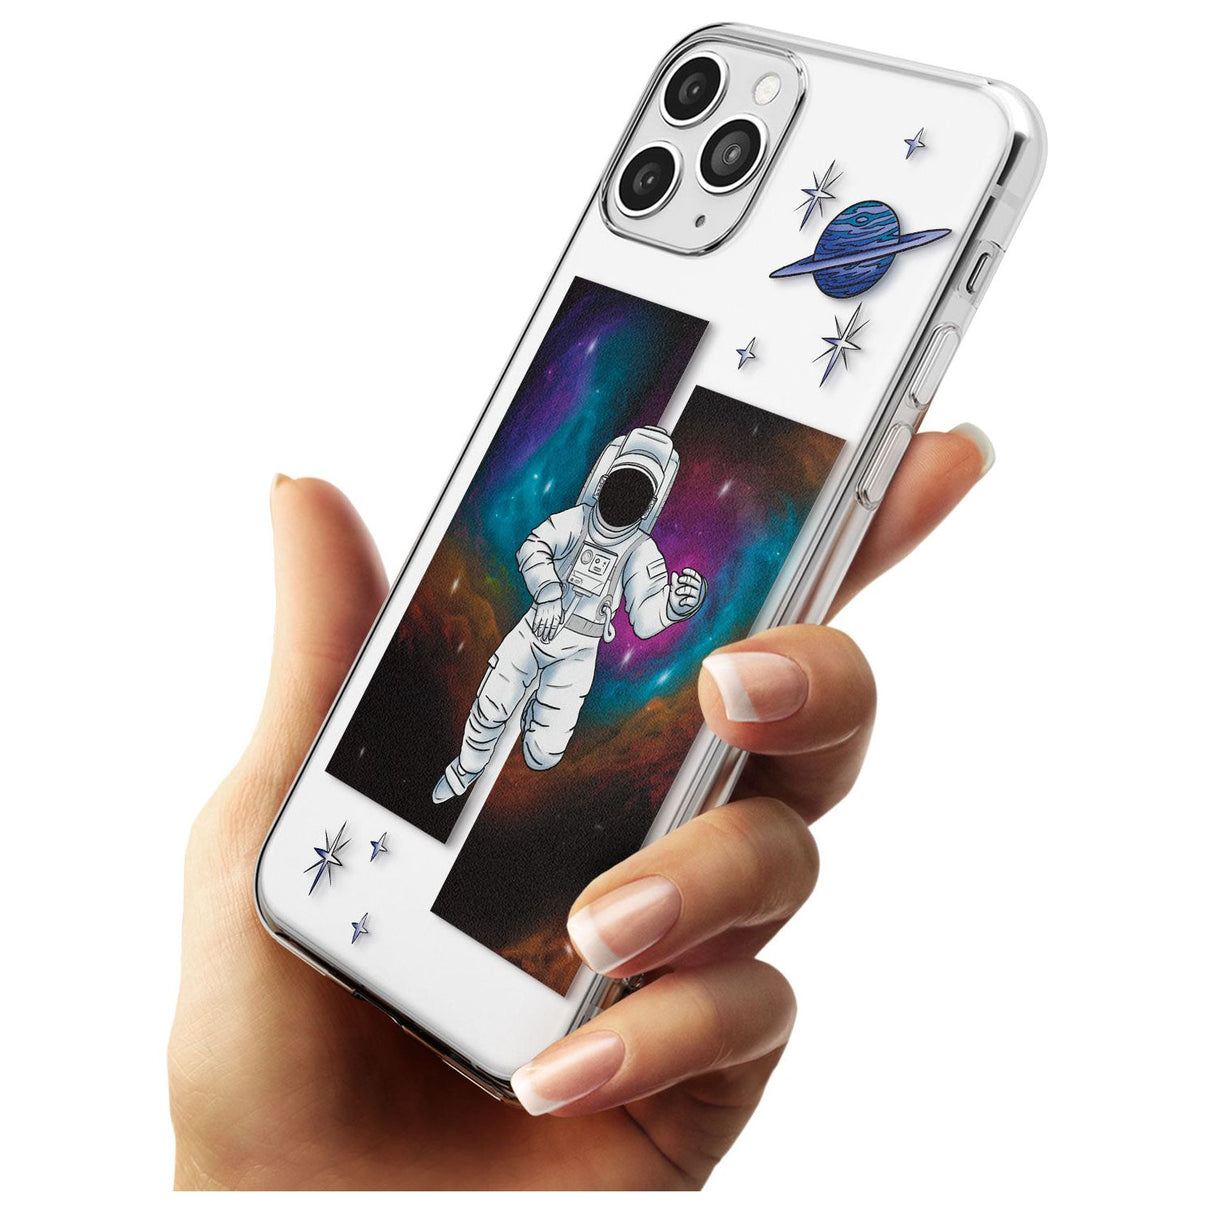 ESCAPE THE NEBULA Black Impact Phone Case for iPhone 11 Pro Max